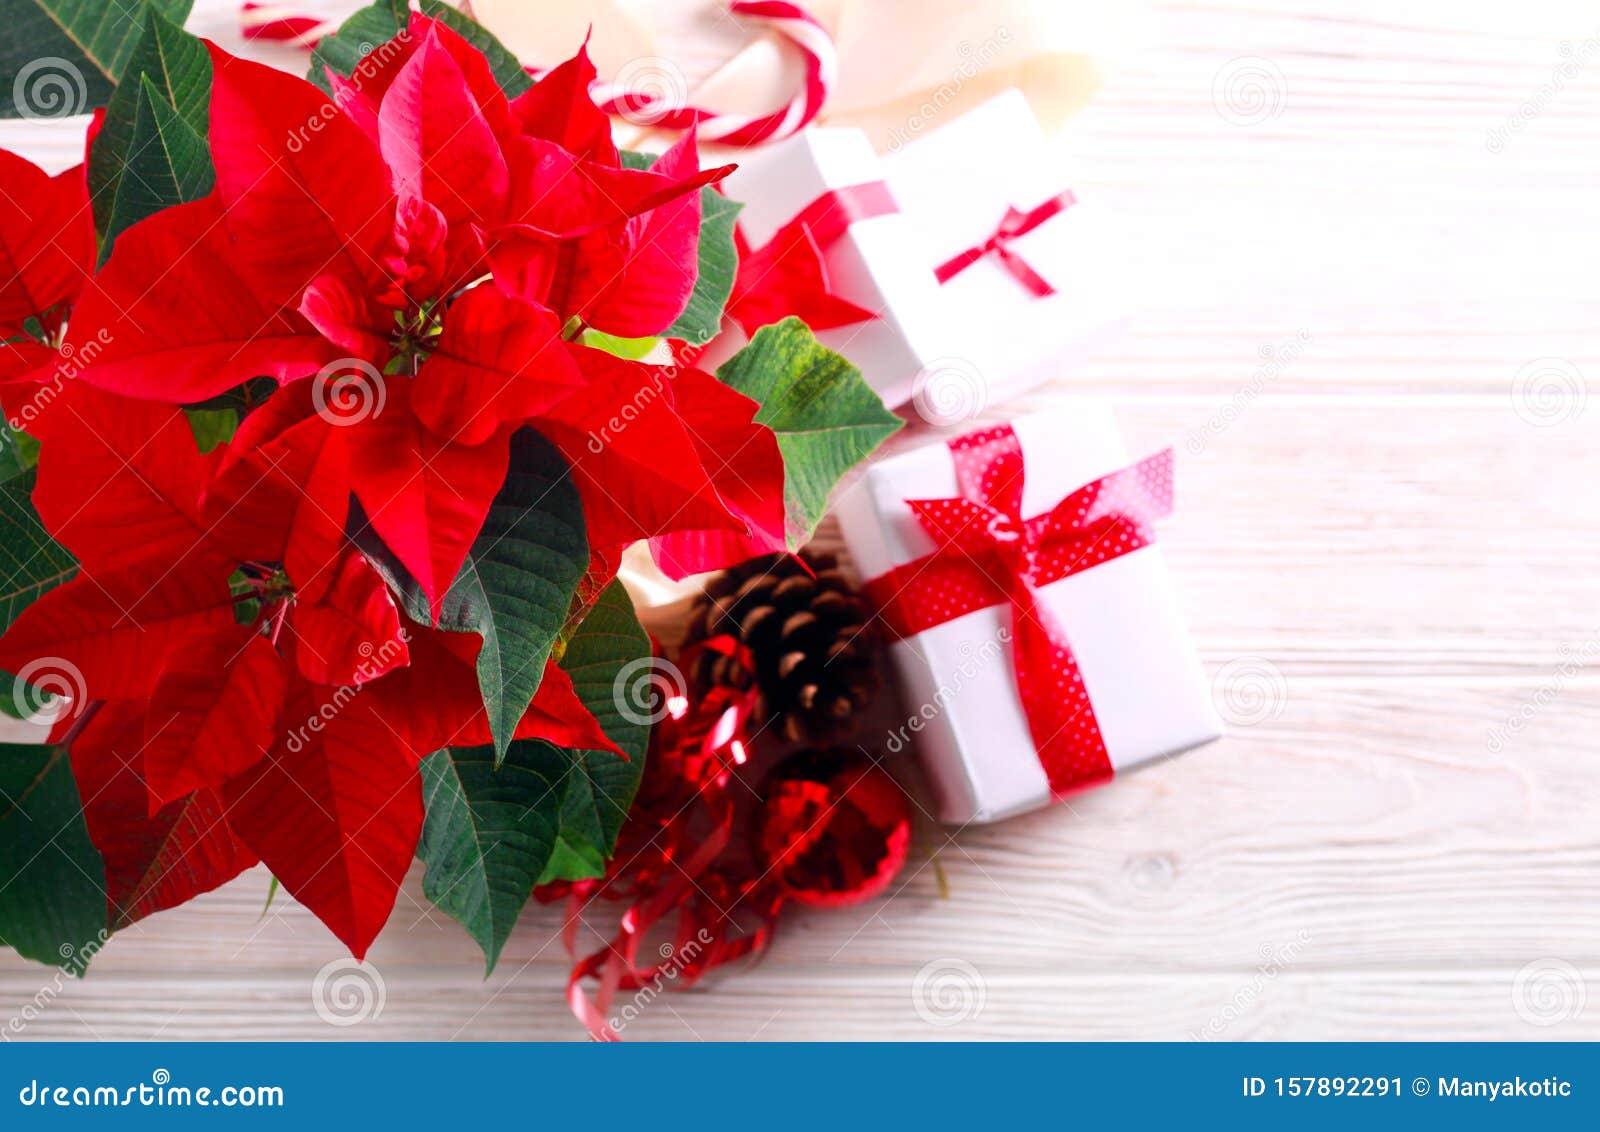 Christmas Flower - Poinsettia Stock Image - Image of christmas, gift ...